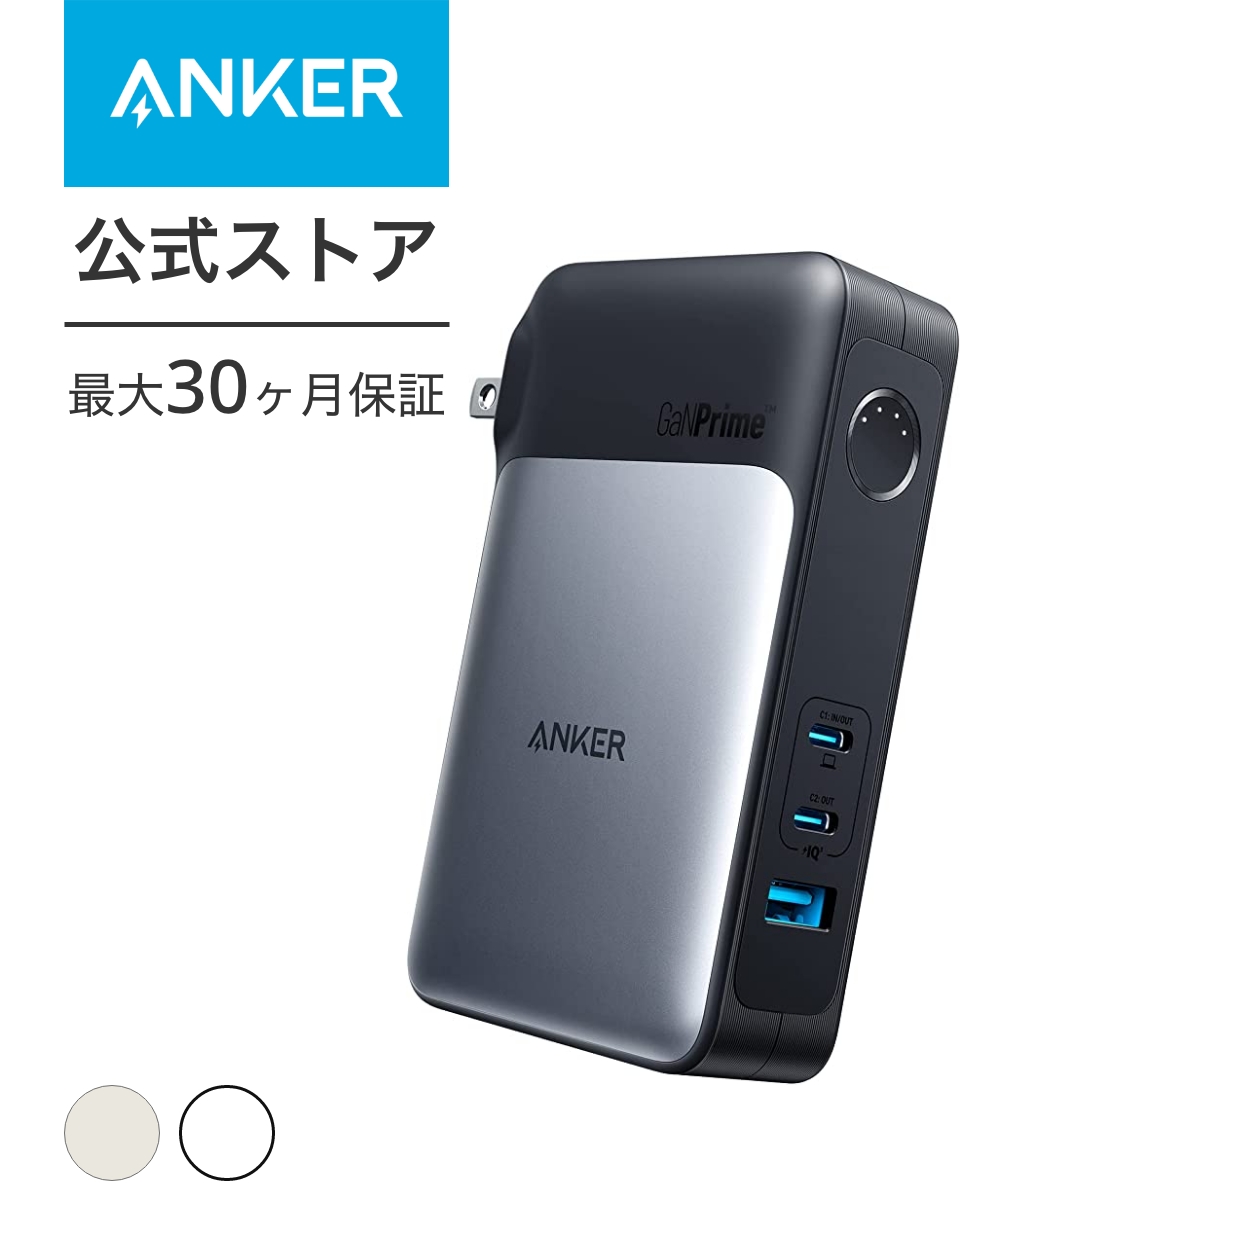 Anker 733 Power Bank (GaNPrime PowerCore 65W) (10000mAhモバイルバッテリー搭載 USB充電器)  【独自技術Anker GaNPrime™採用 / USB Power Delivery対応 / PSE技術基準適合 / USB-C入力対応 / 